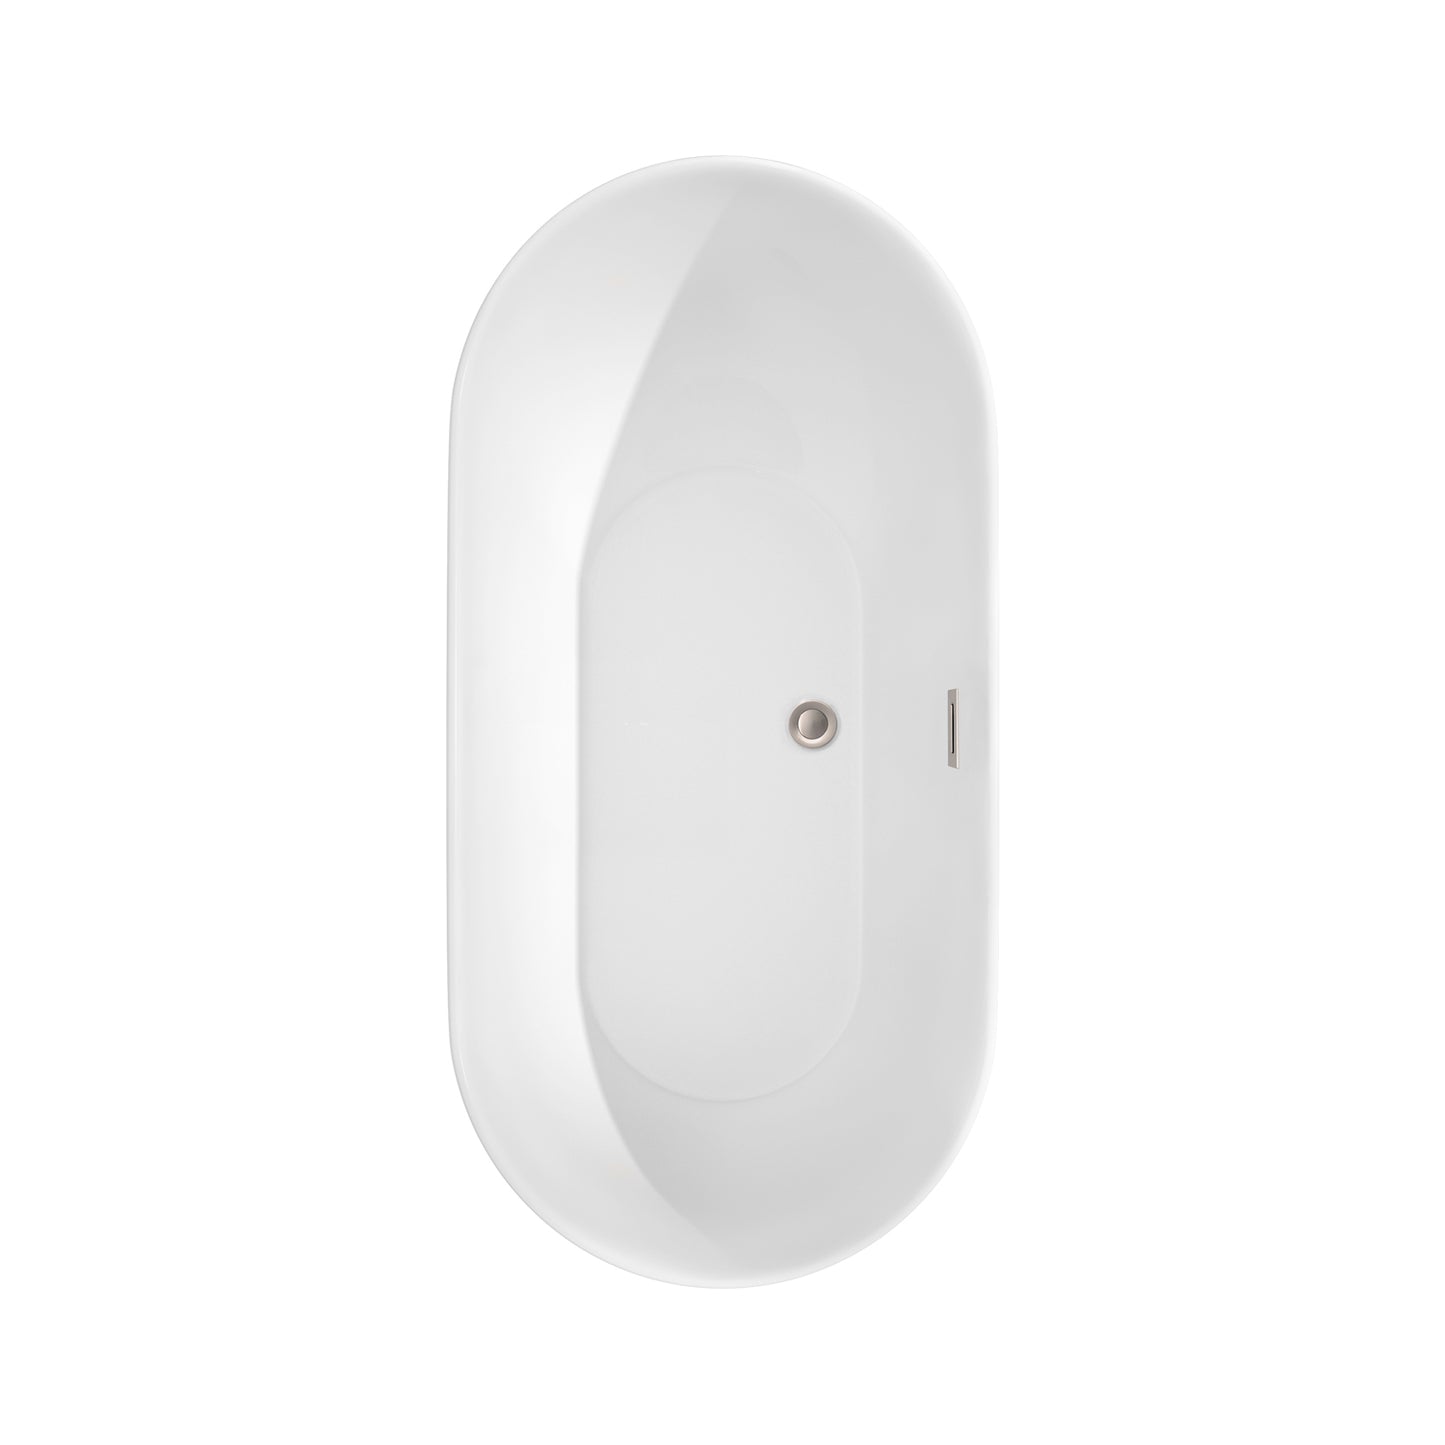 60 inch Freestanding Bathtub in White with Drain and Overflow Trim - Luxe Bathroom Vanities Luxury Bathroom Fixtures Bathroom Furniture